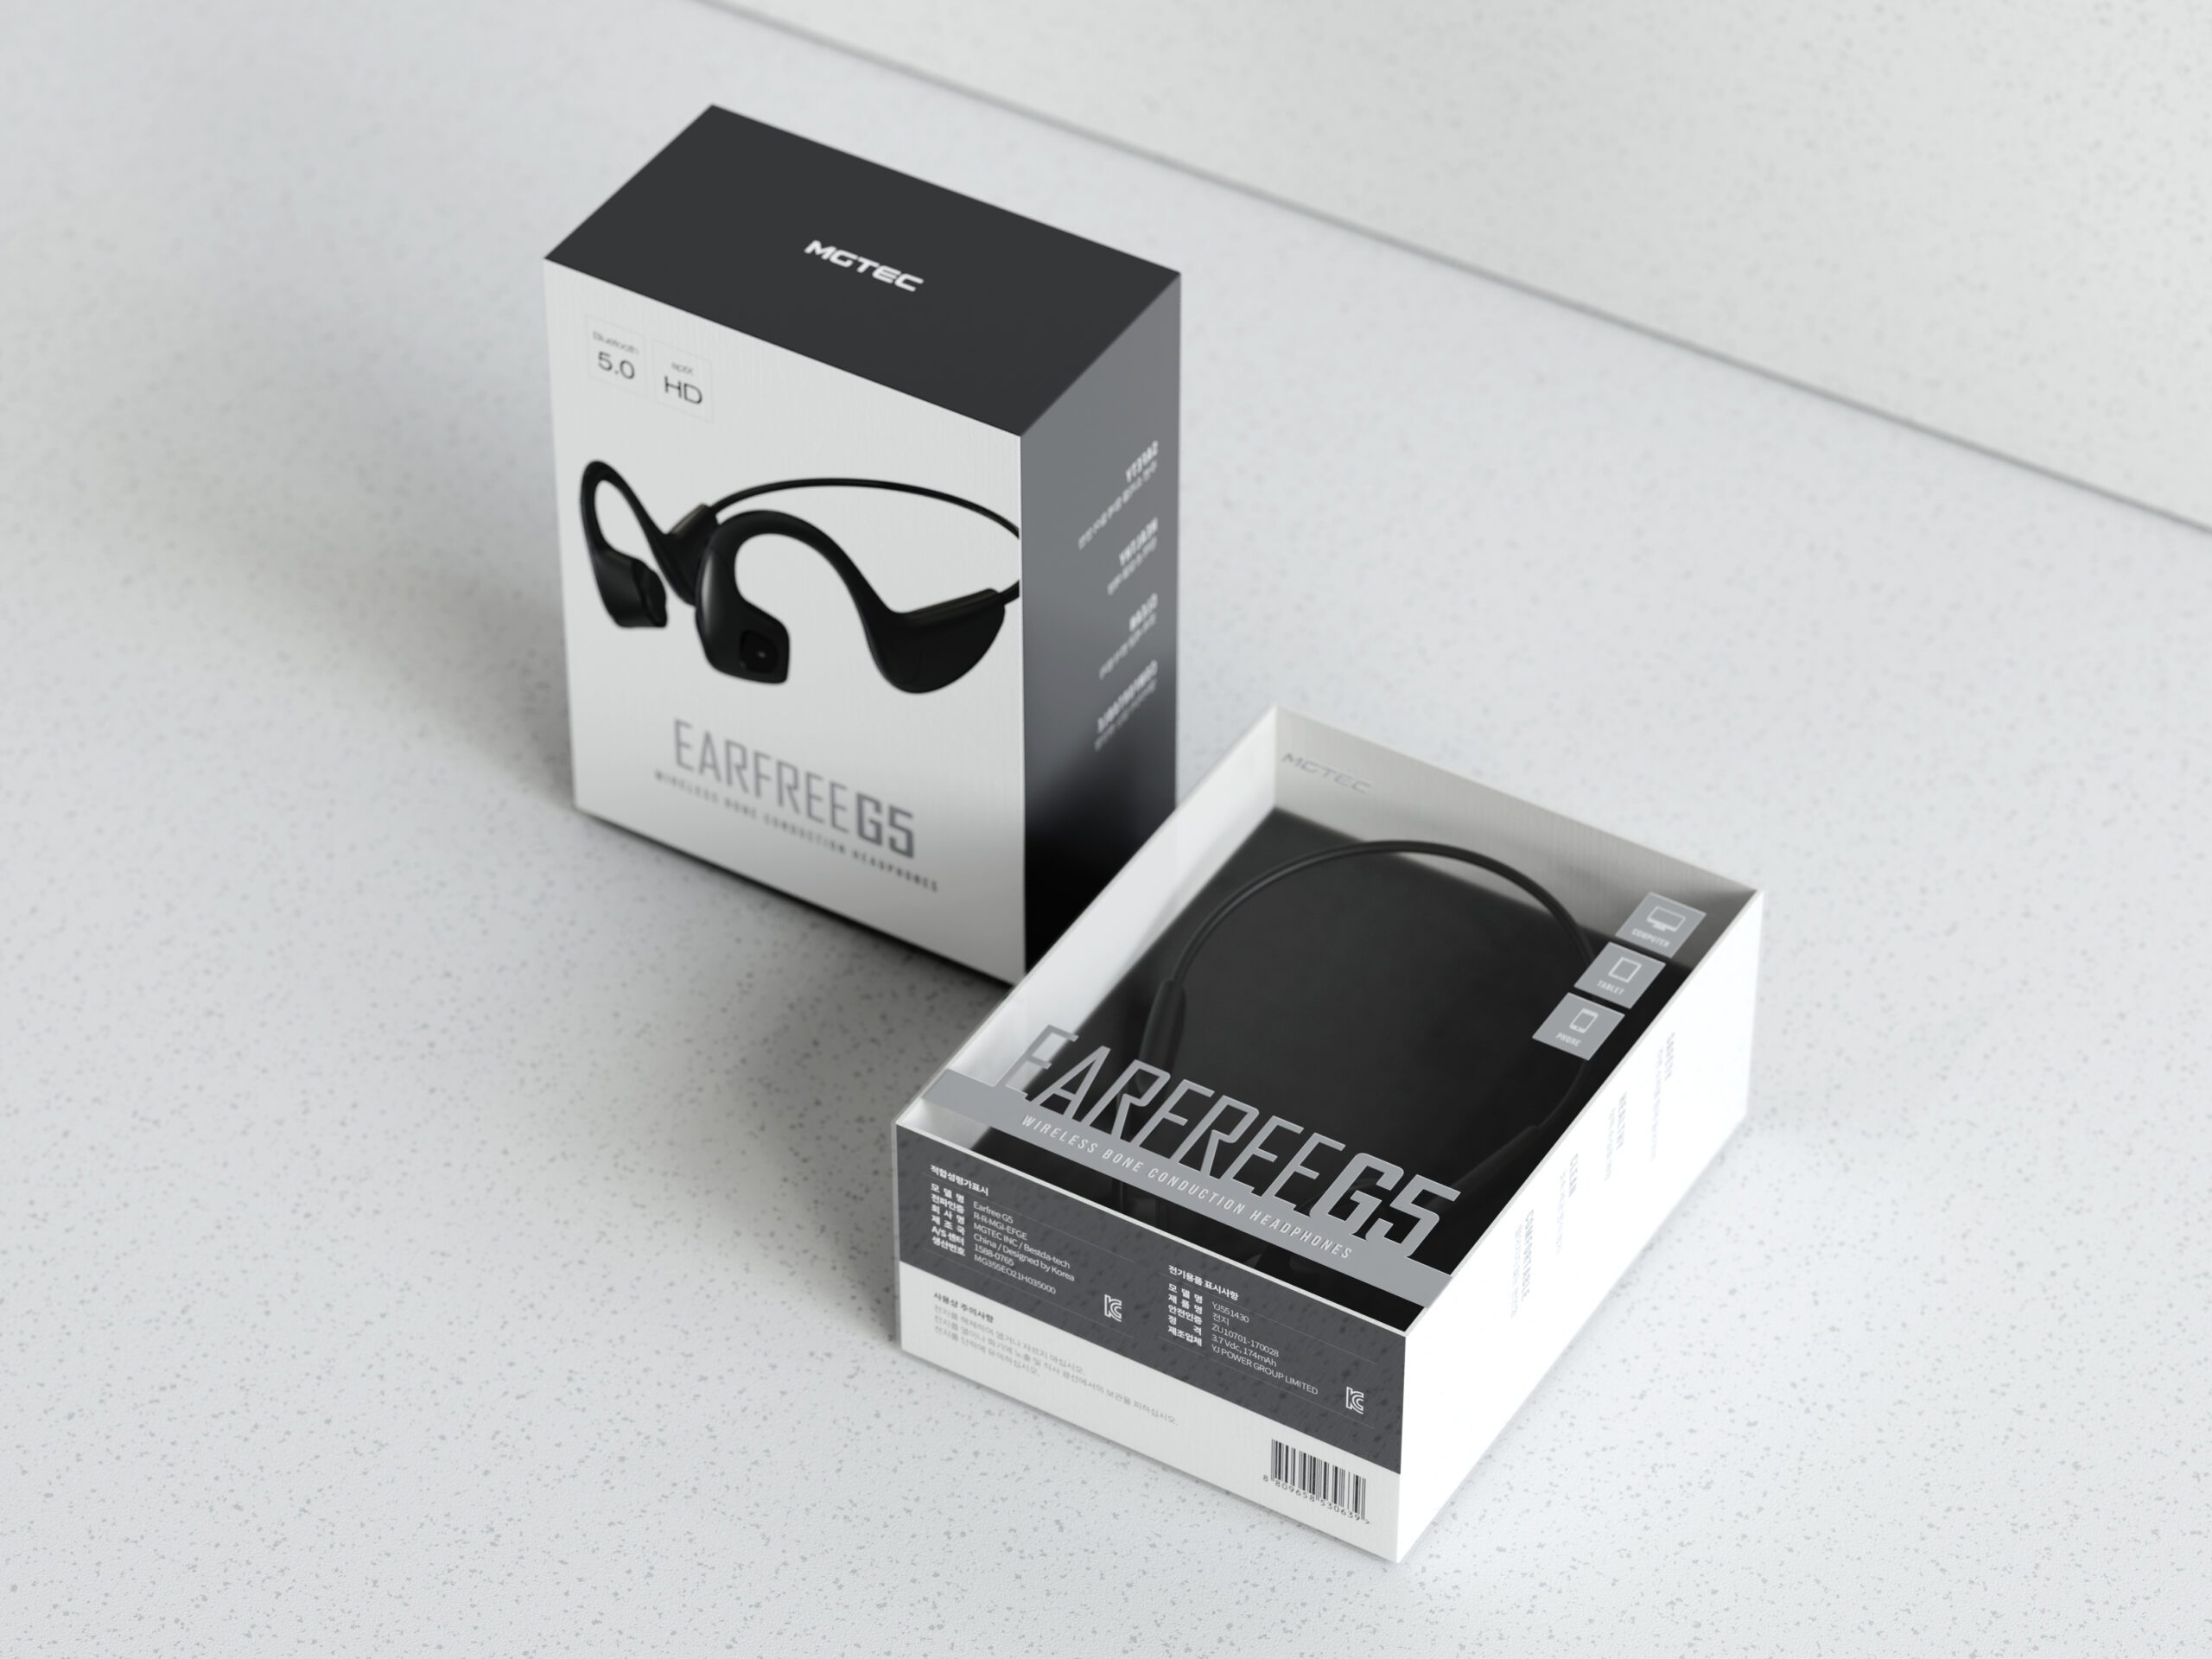 Earfree G5 Earphone 패키지, 3D 목업